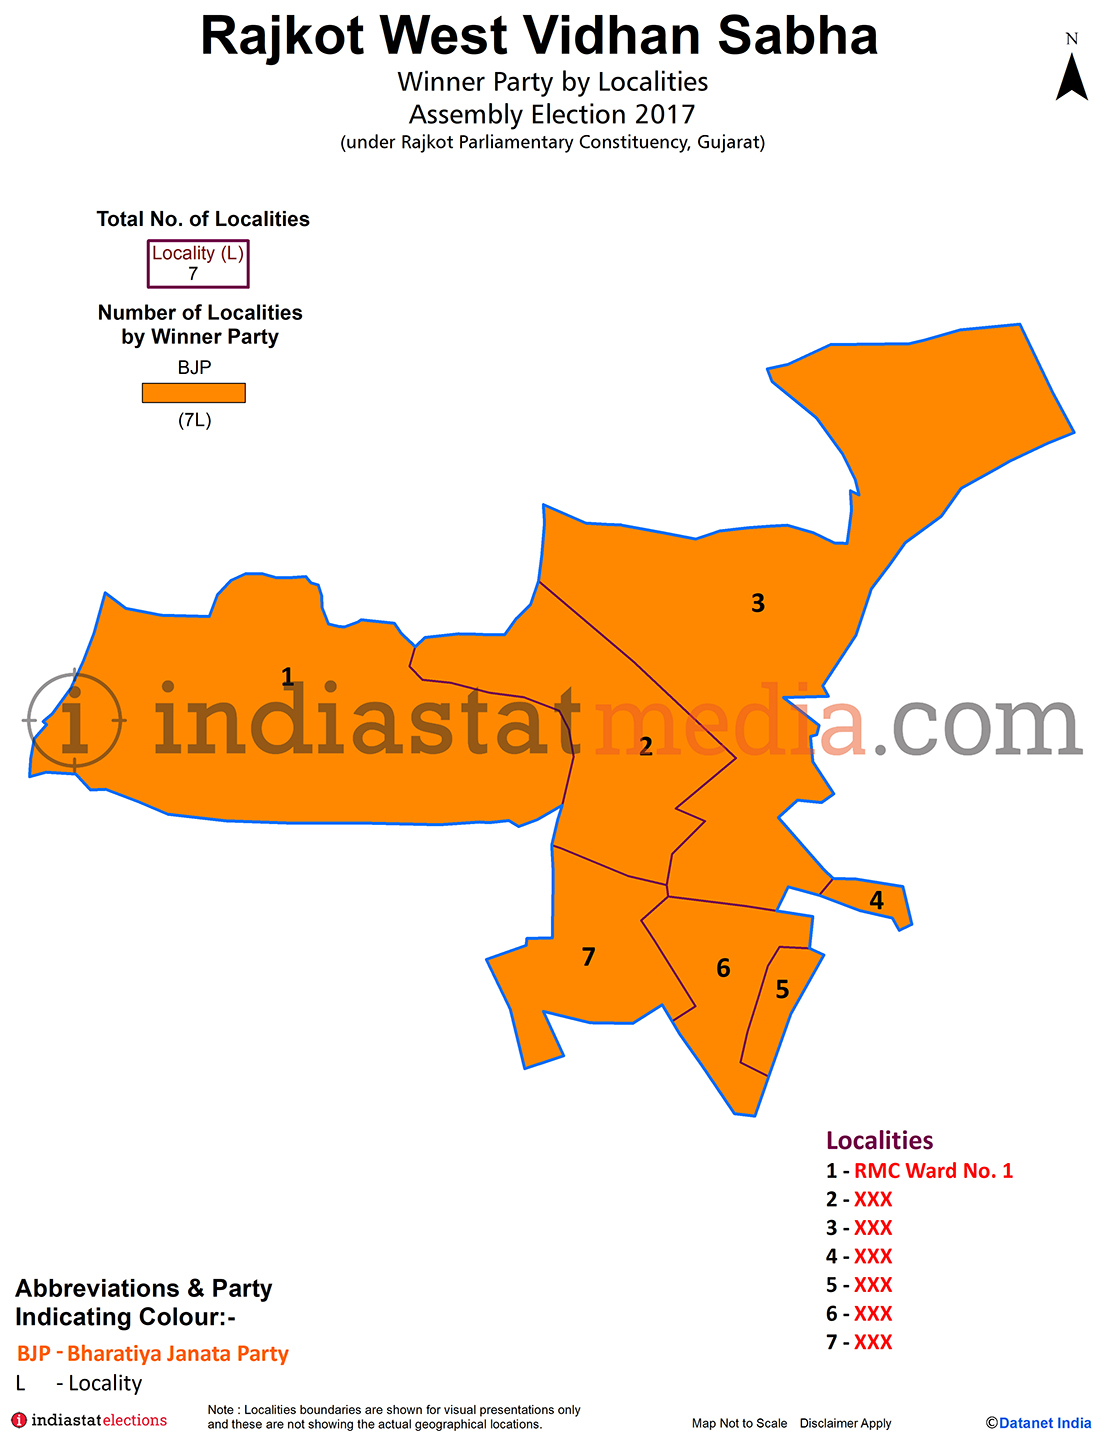 Winner Parties by Localities in Rajkot West Assembly Constituency under Rajkot Parliamentary Constituency in Gujarat (Assembly Election - 2017)